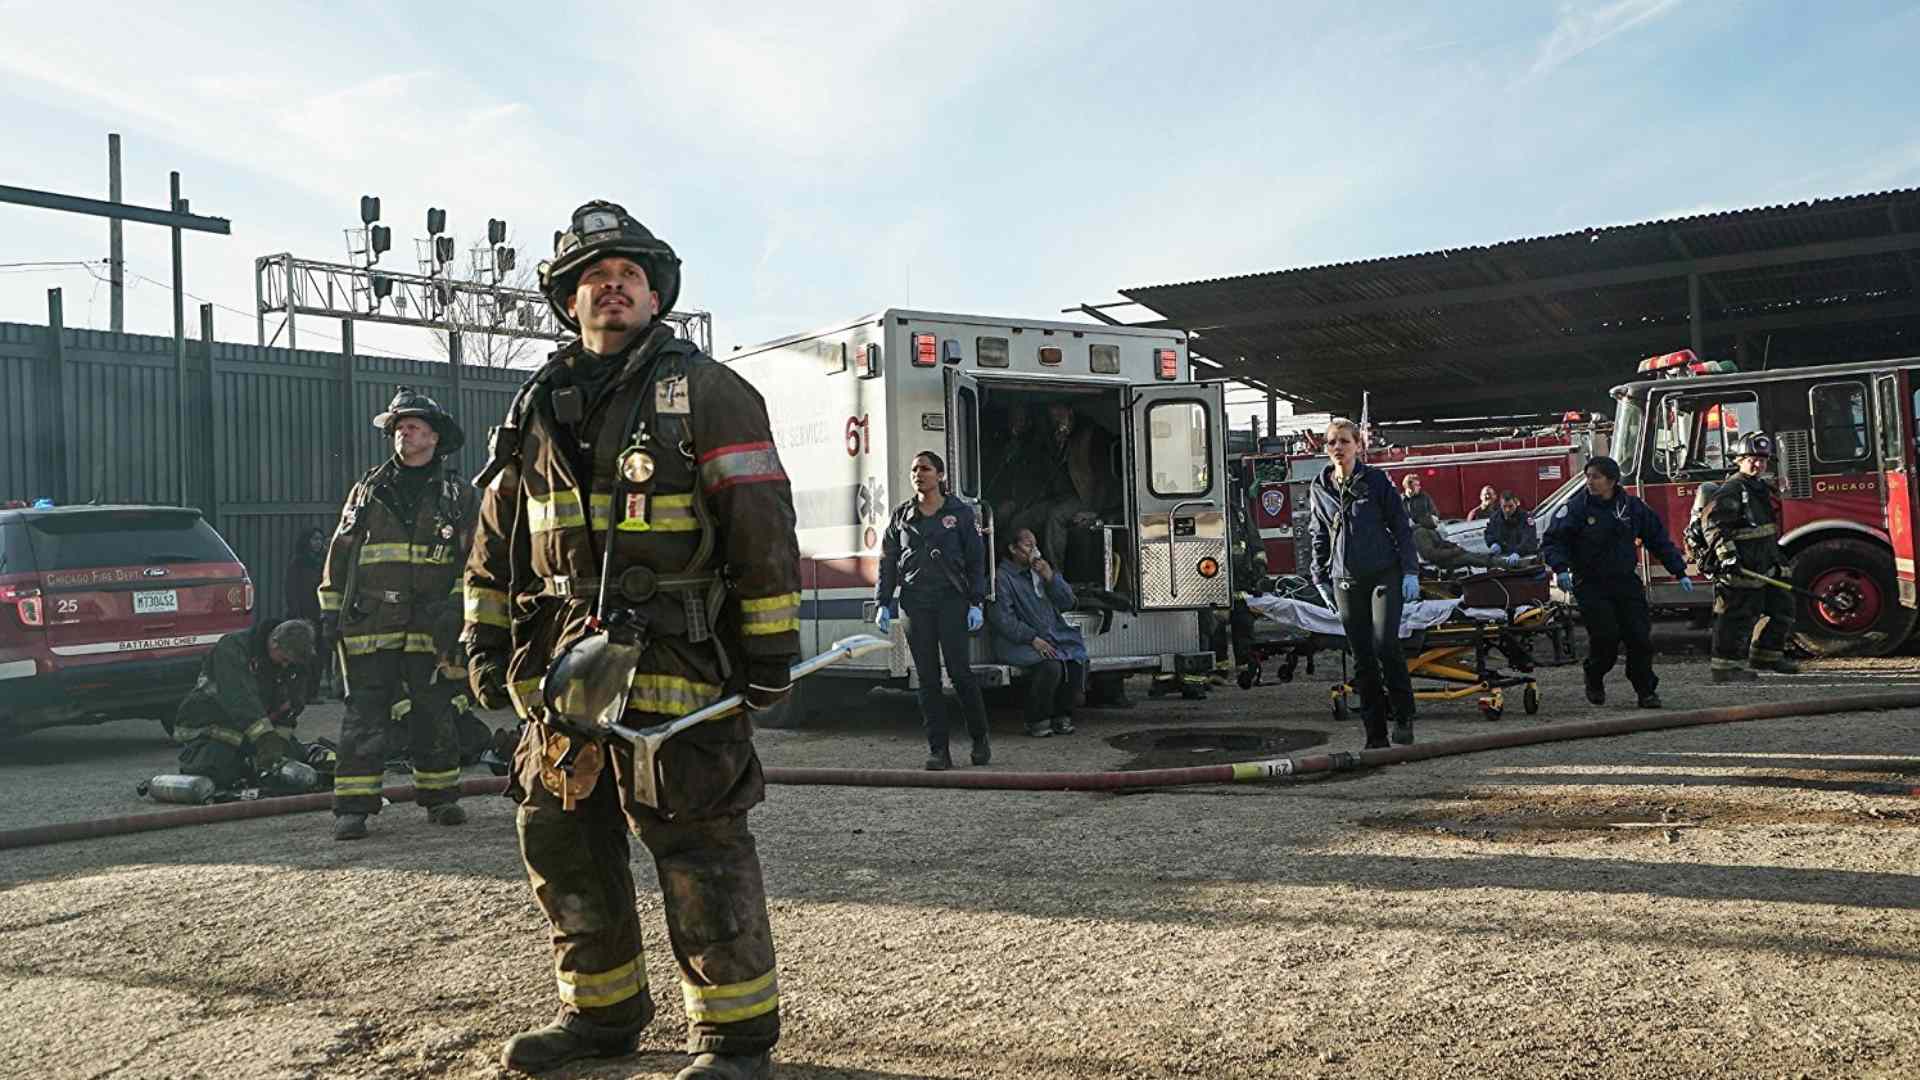 Chicago Fire - Season 5 Watch Online Free on PrimeWire - Chicago Fire Season 5 Episode 2 Watch Online Free